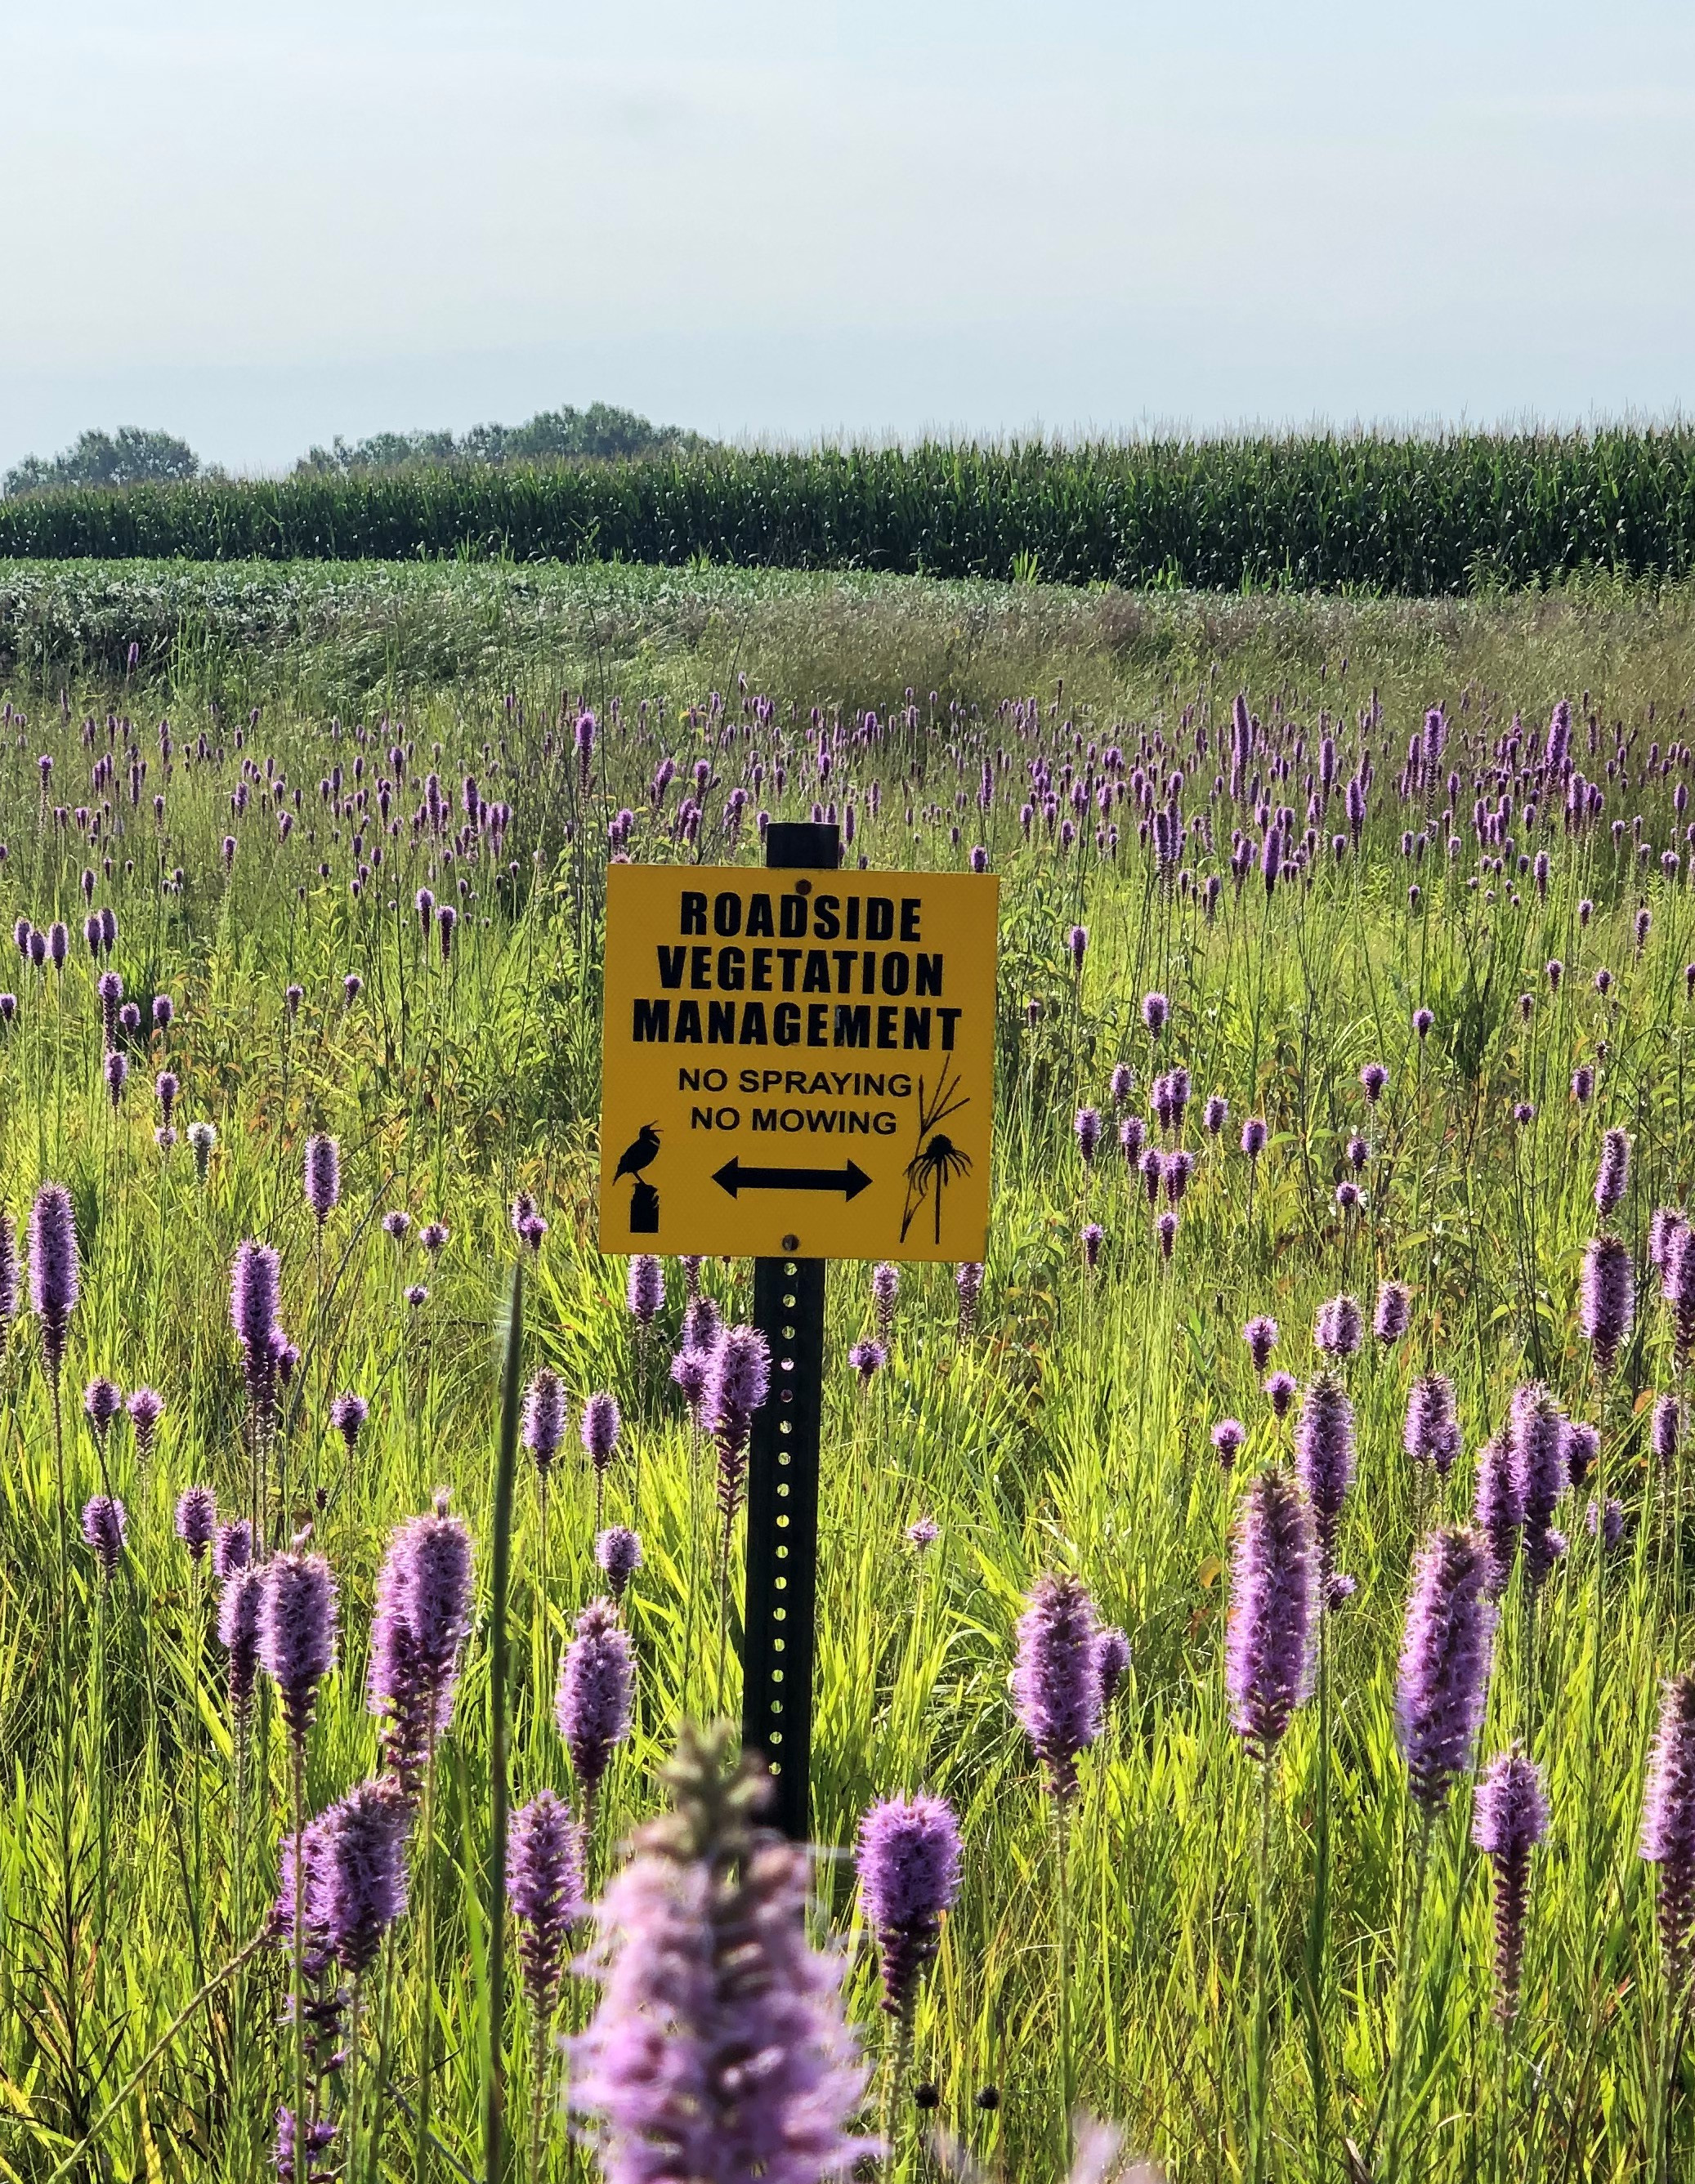 Roadside vegetation sign in ditch full of liatris in bloom 